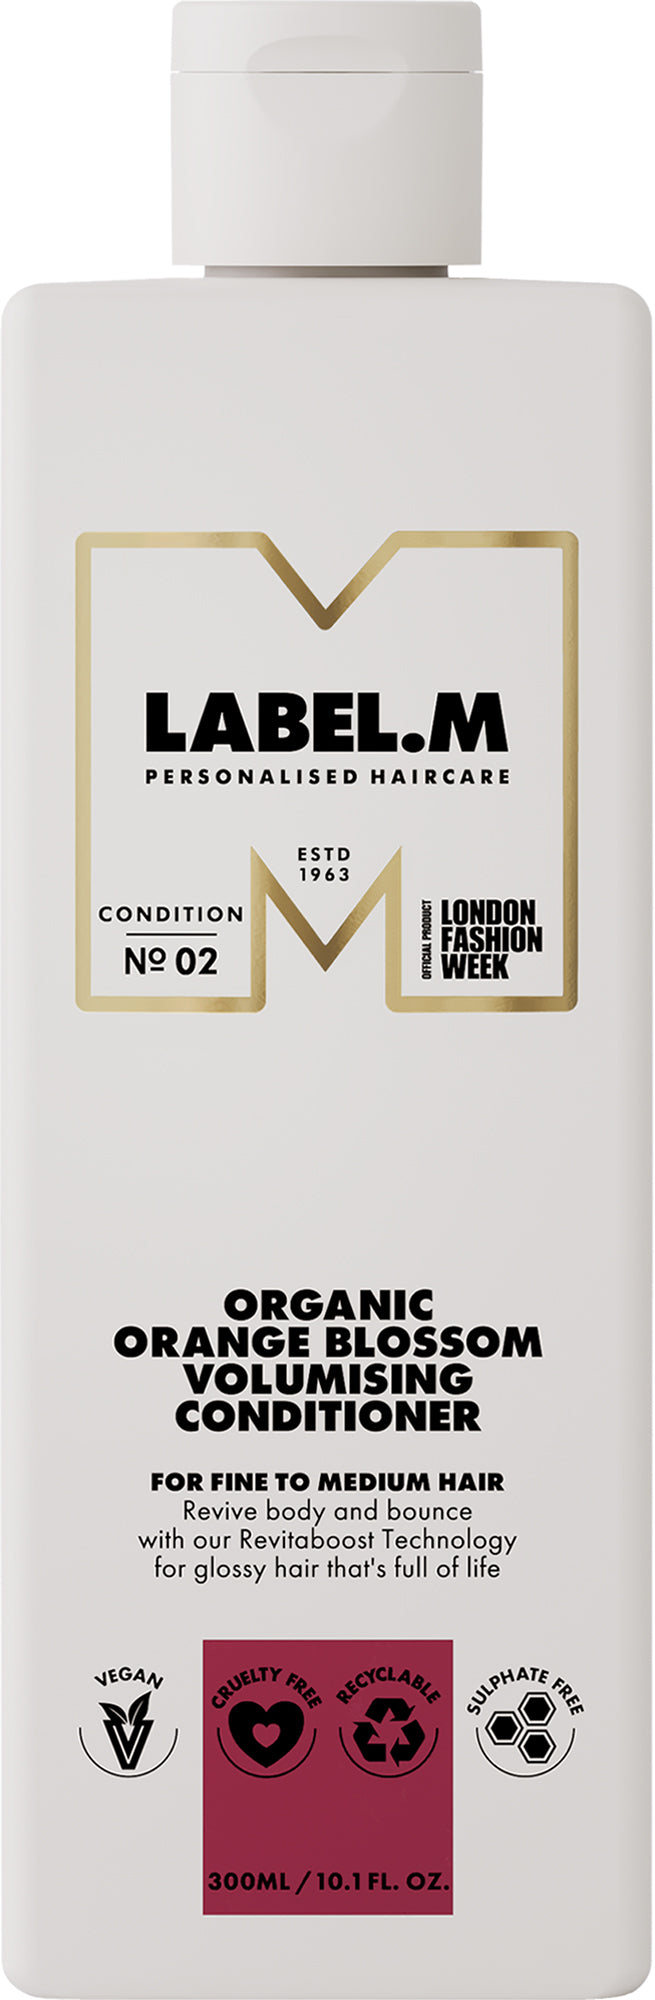 Label.m Organic Orange Blossom volumizing conditioner 1000 ml